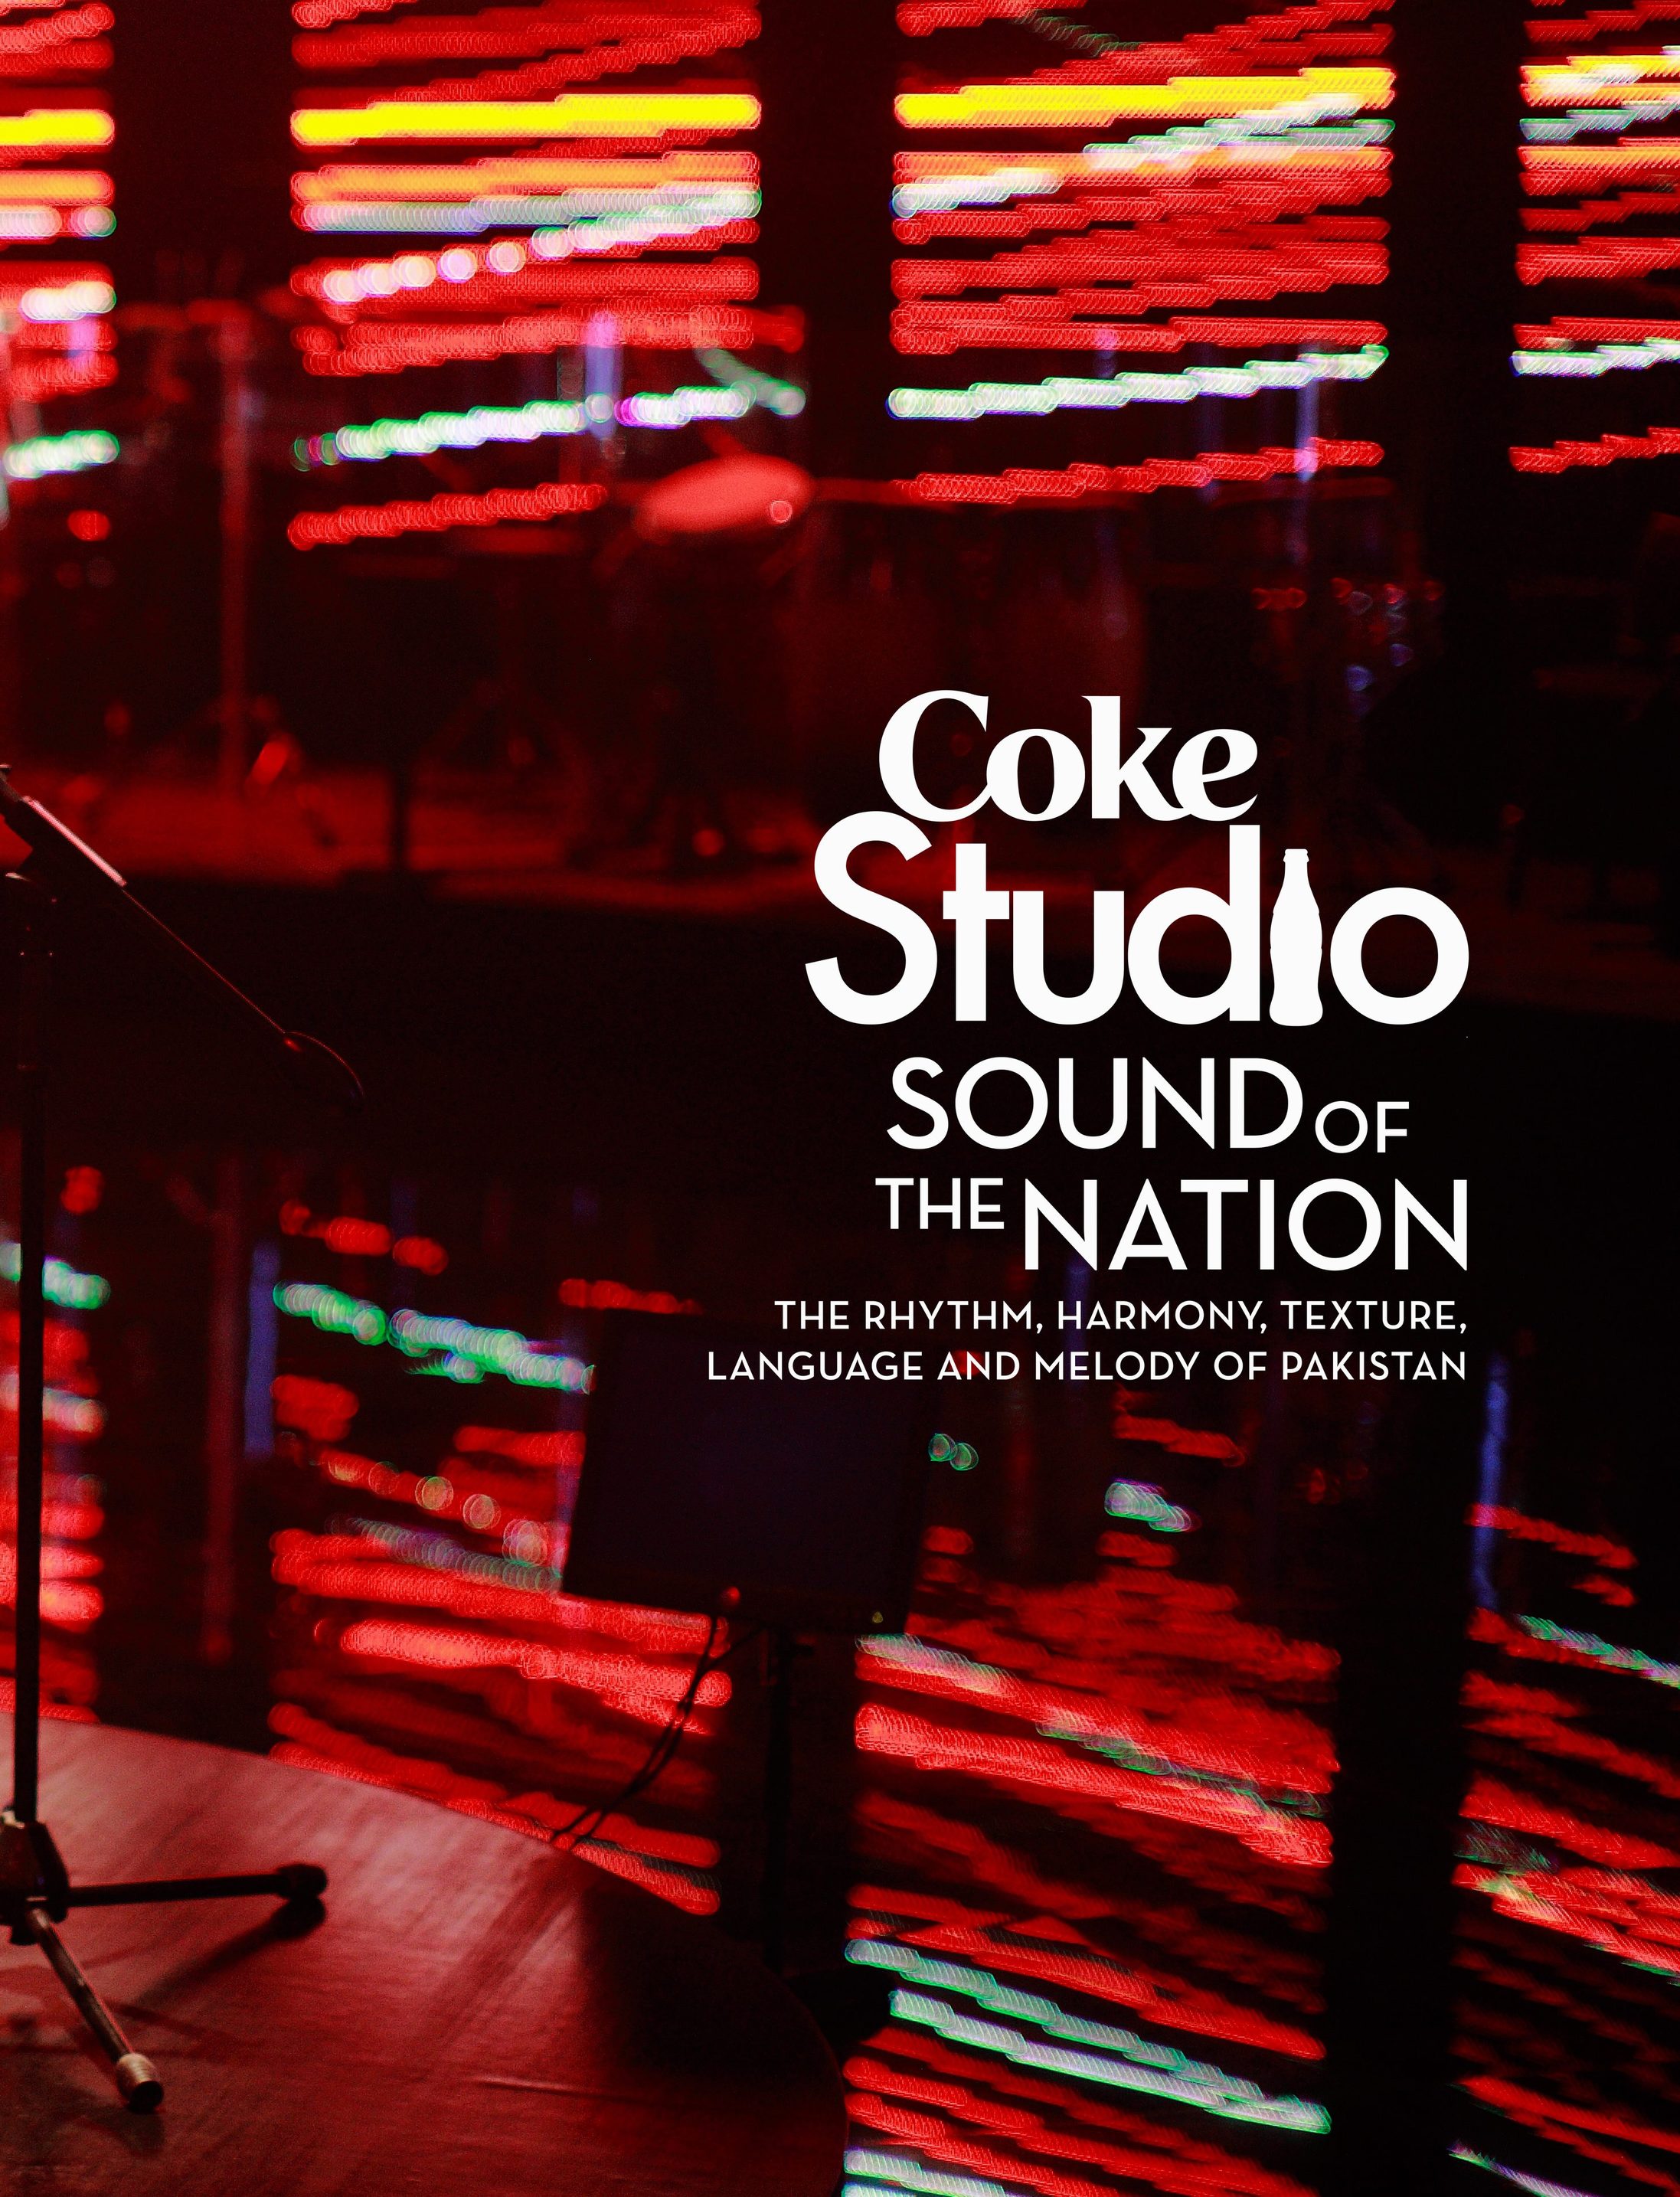 coke studio - sound of the nation